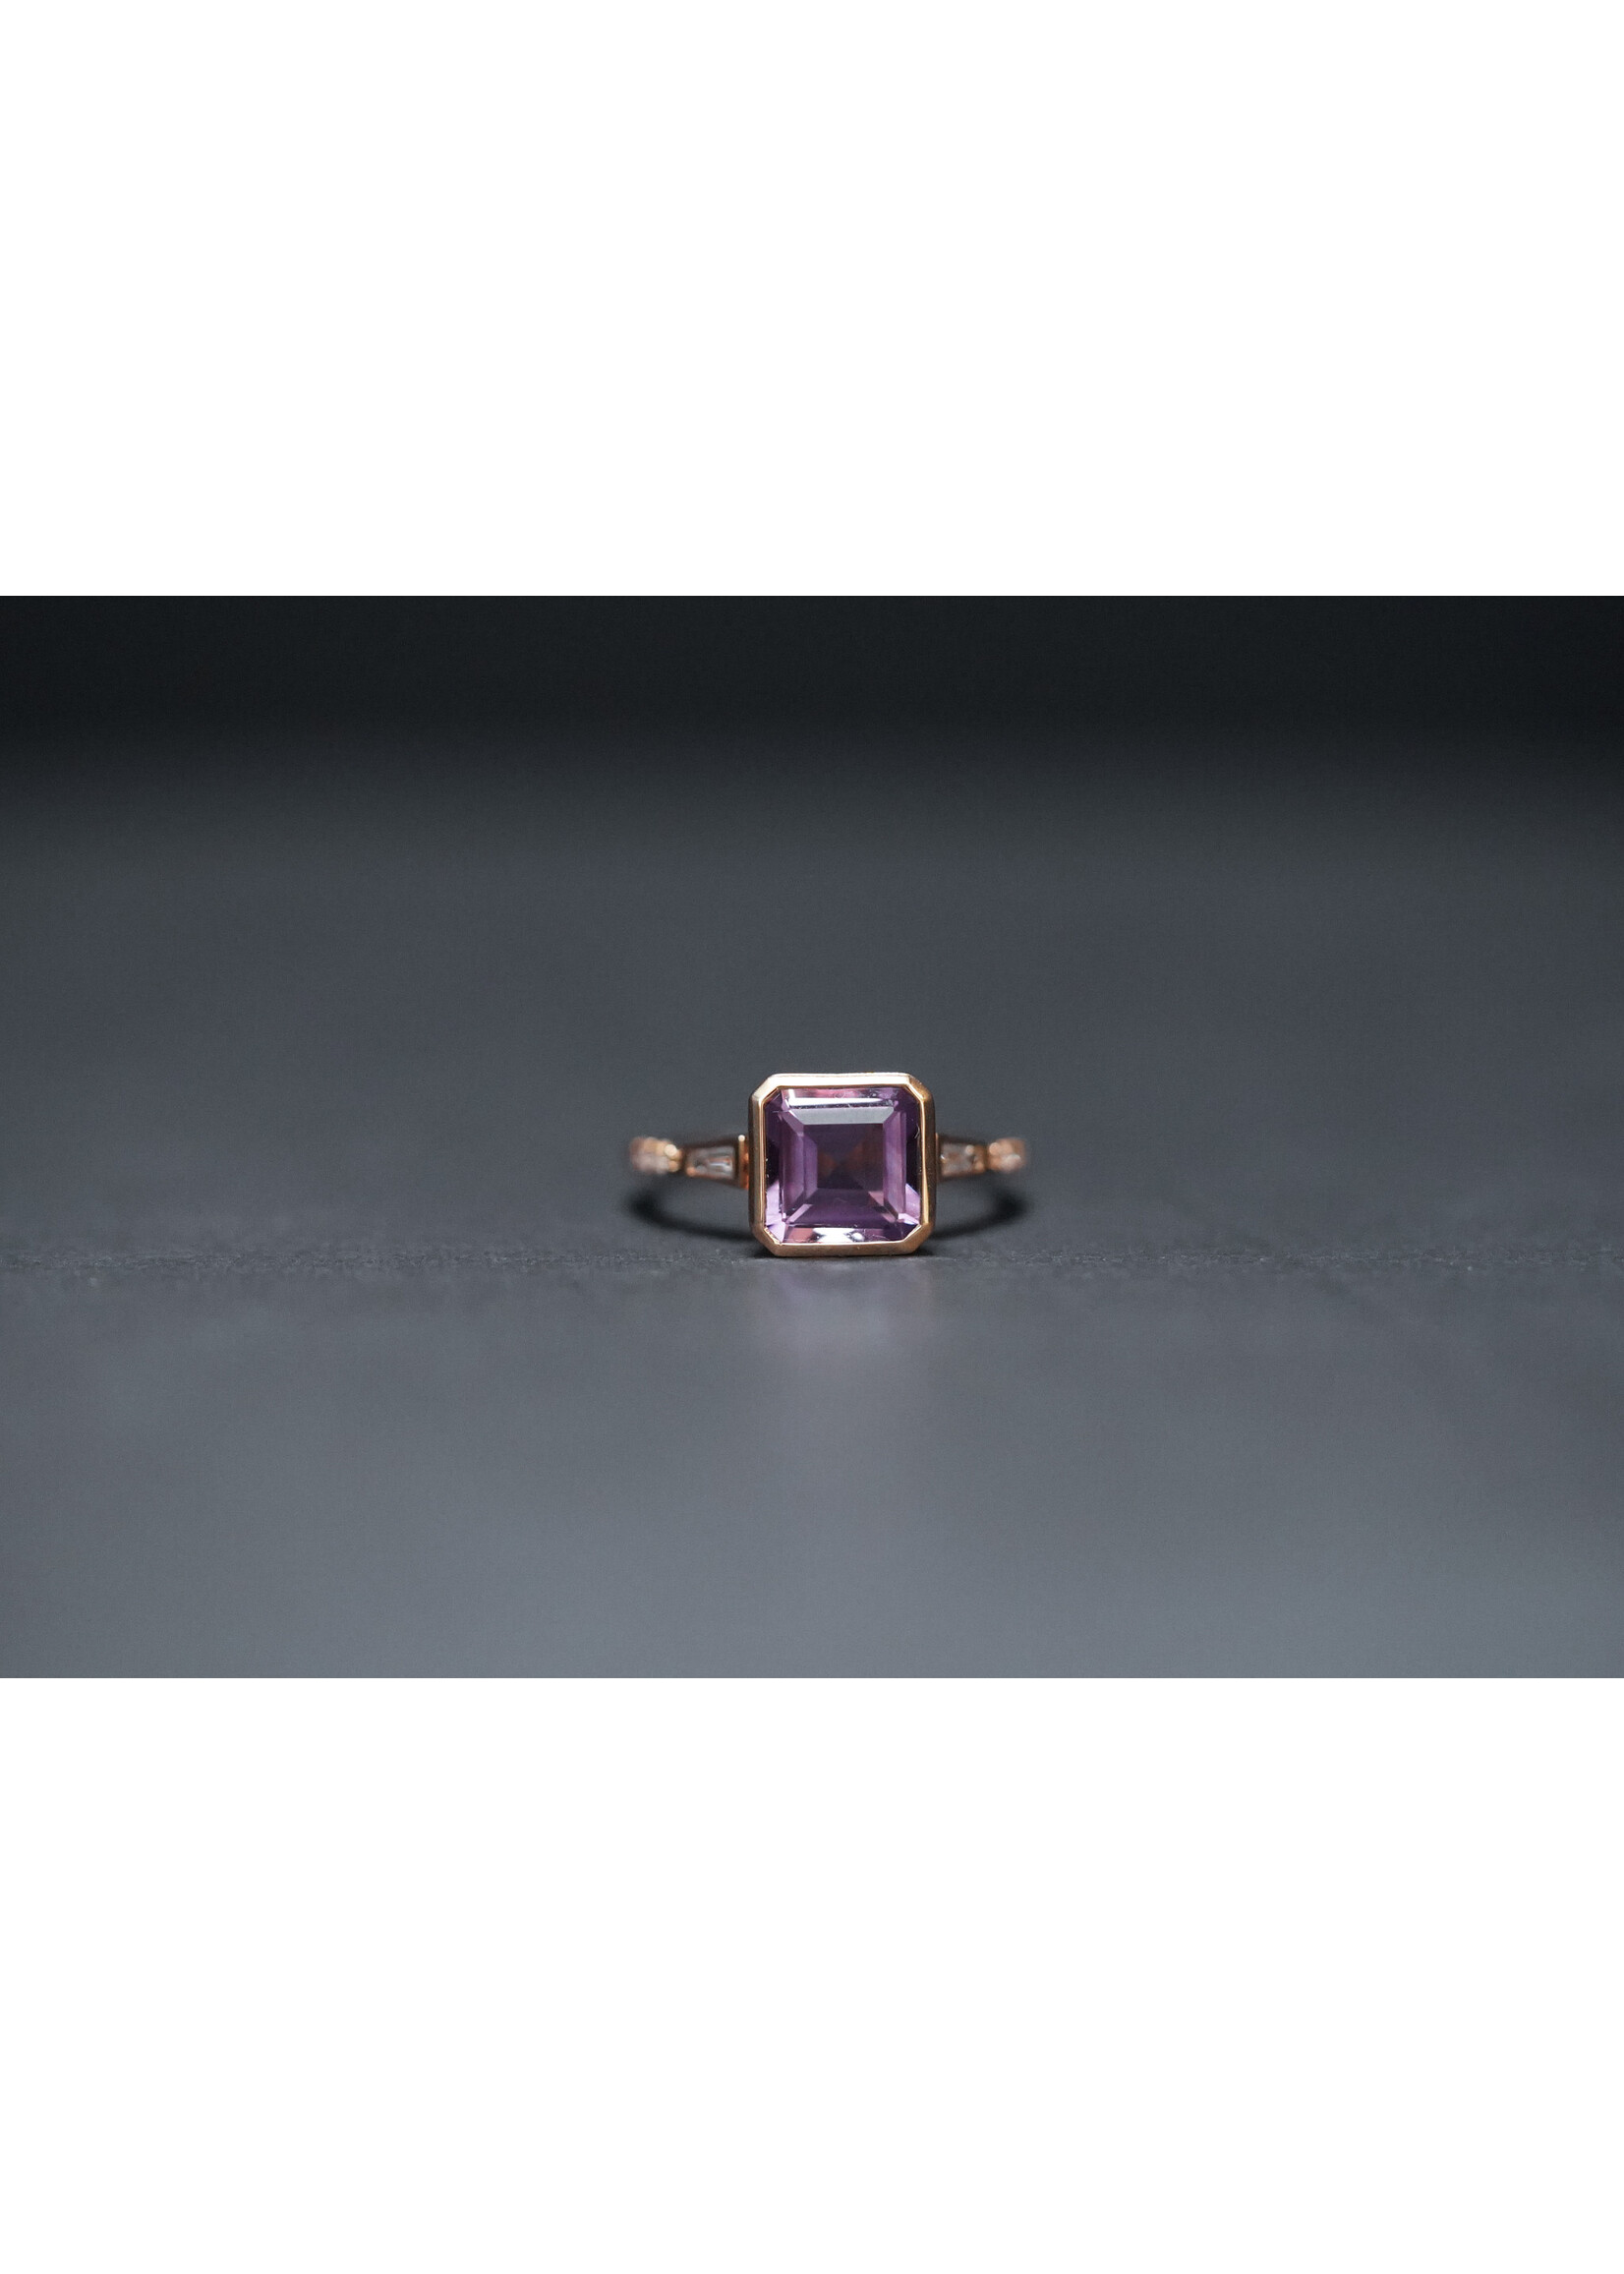 14KR 2.90g 2.56ctw (2.44ctr) Effy Amethsyt & Diamond Fashion Ring (size 7)